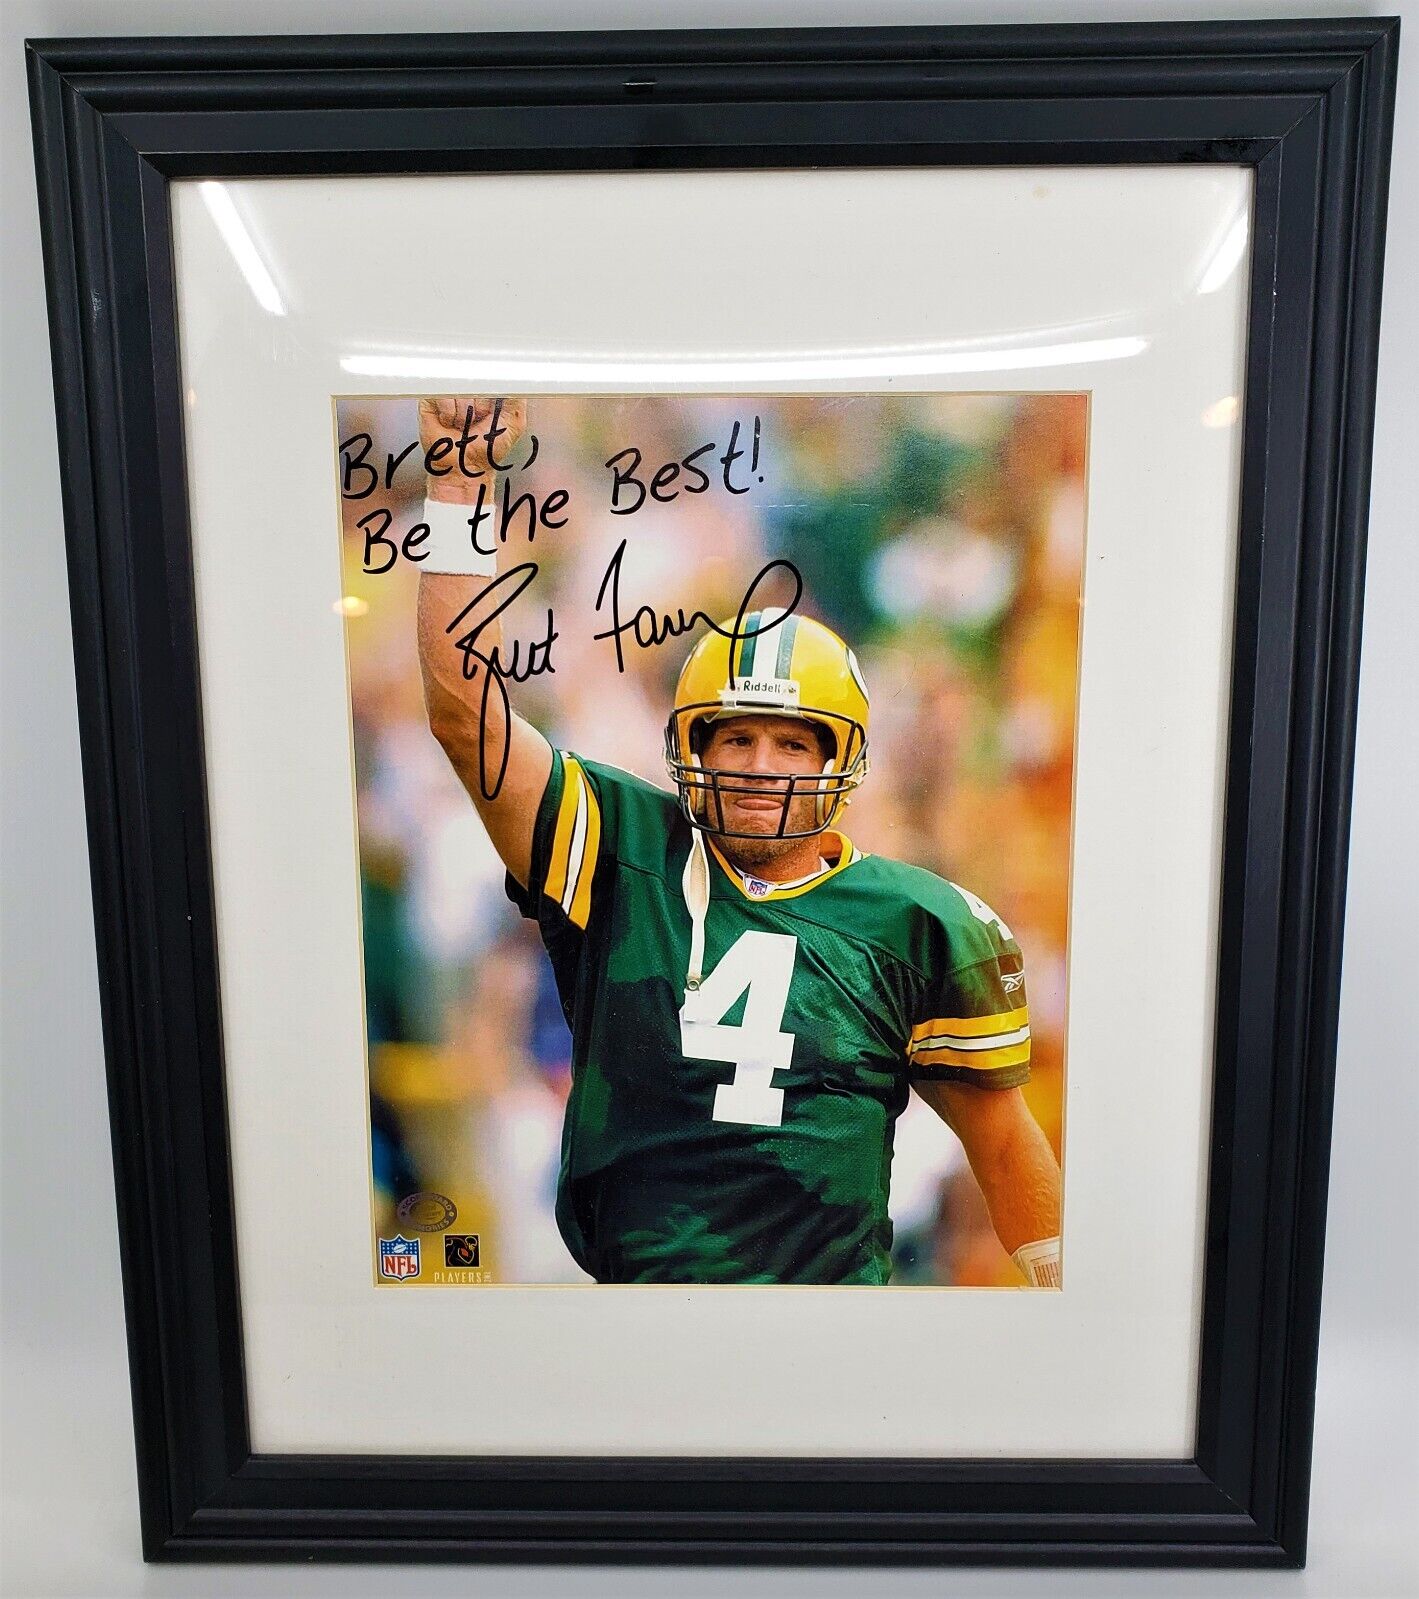 Framed - Matted - Signed & Inscribed NFL Packers Photo of Brett Favre 13